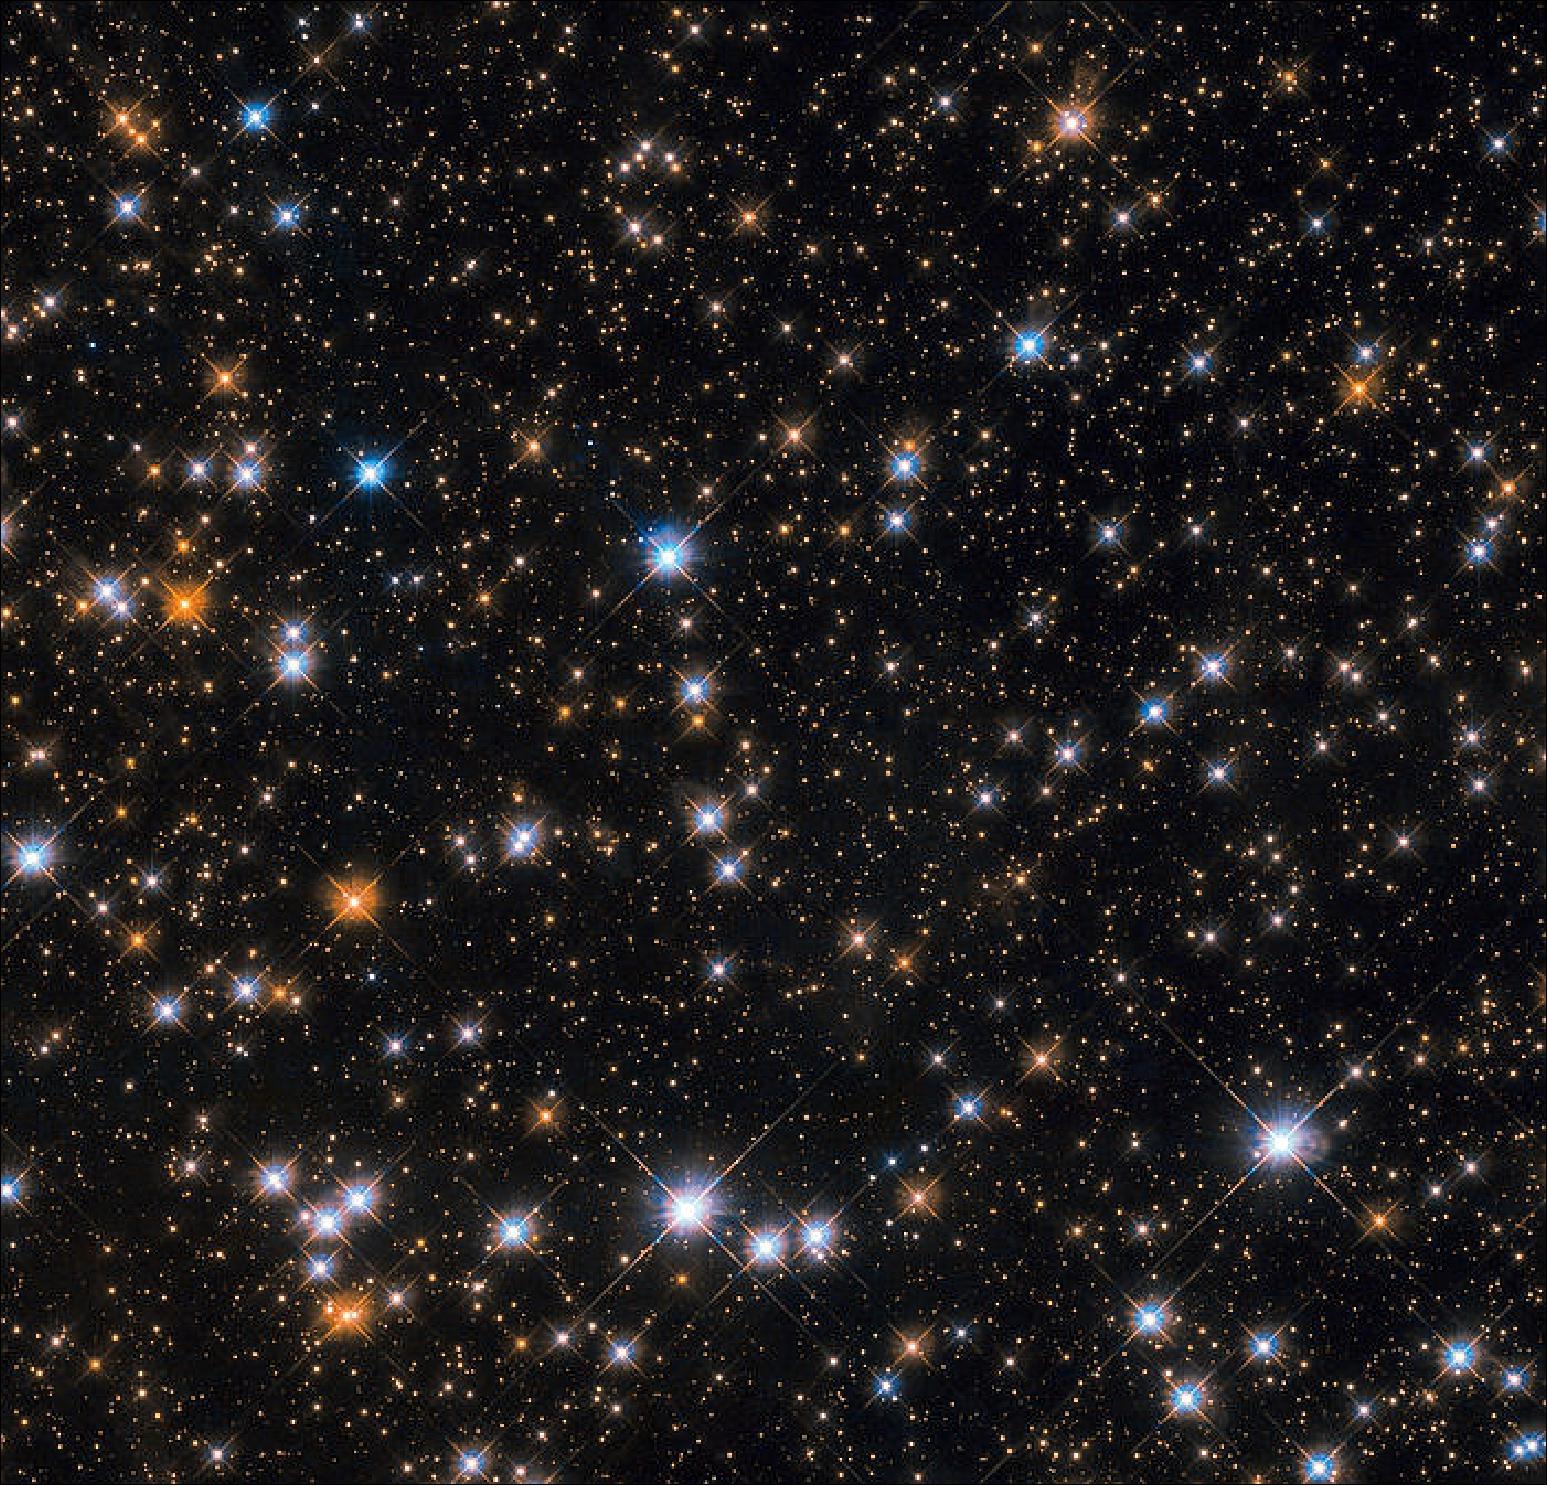 Figure 63: Wild cosmic ducks (image credit: ESA/Hubble & NASA, P. Dobbie et al.; CC BY 4.0)